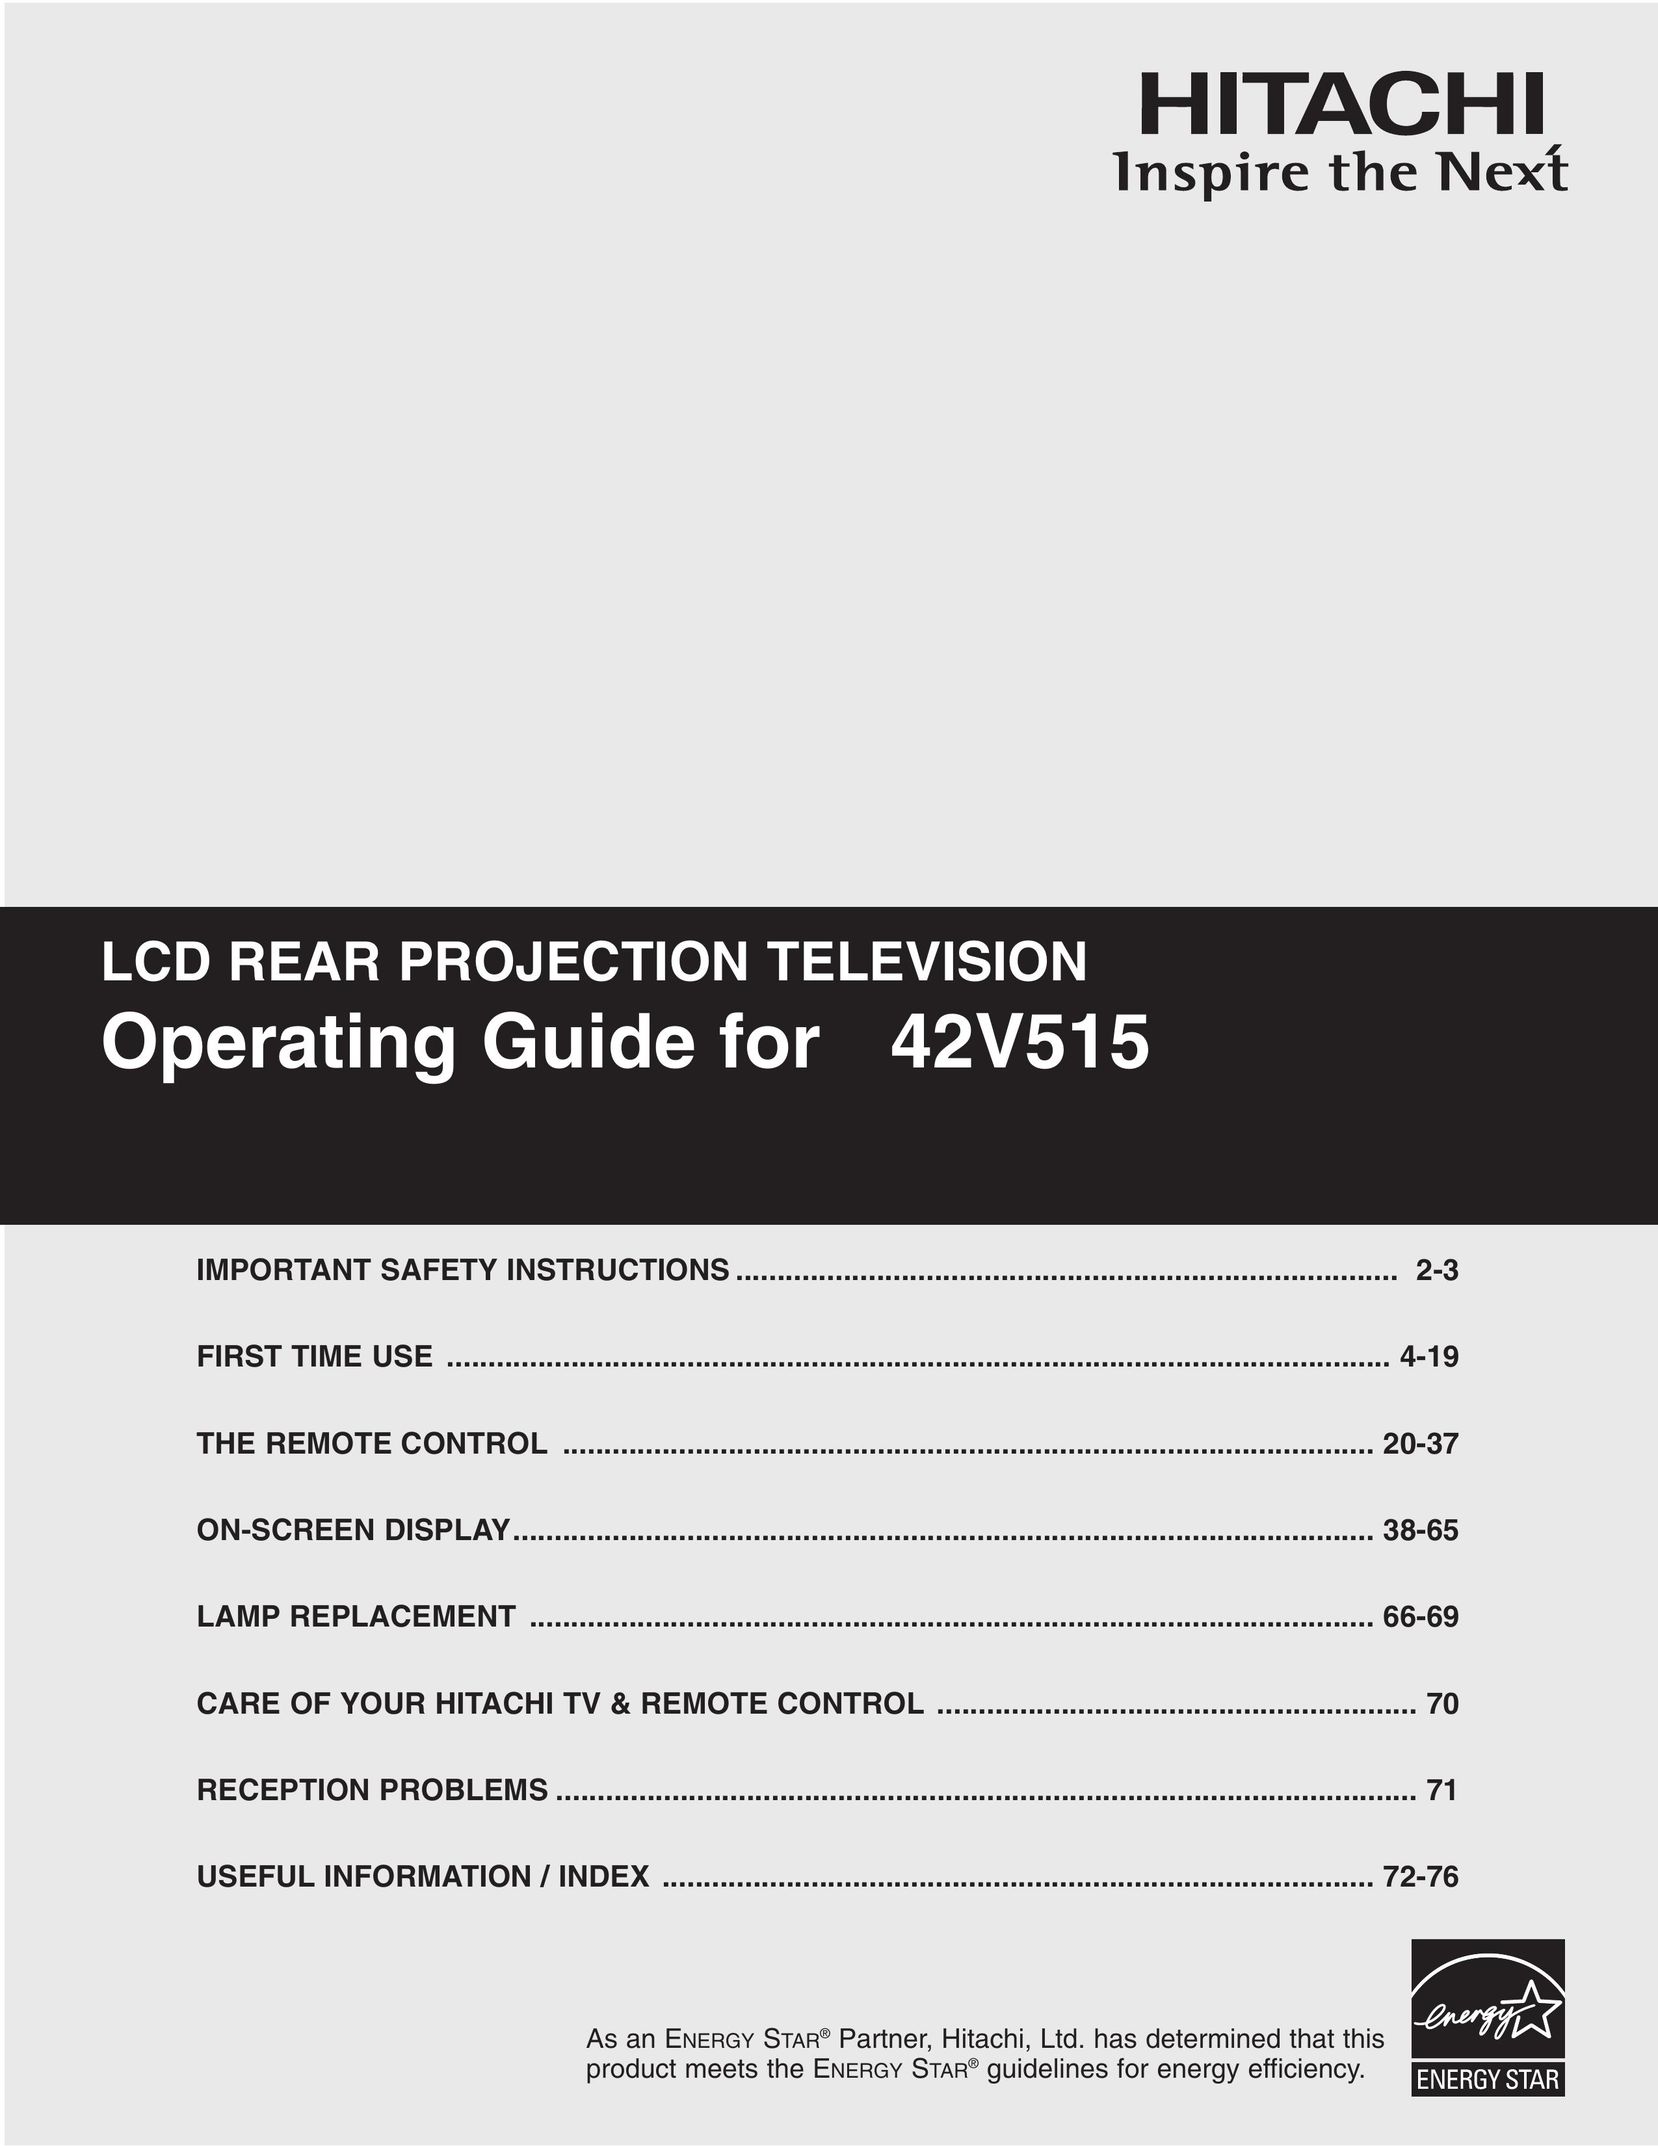 Hitachi 42V515 Projection Television User Manual